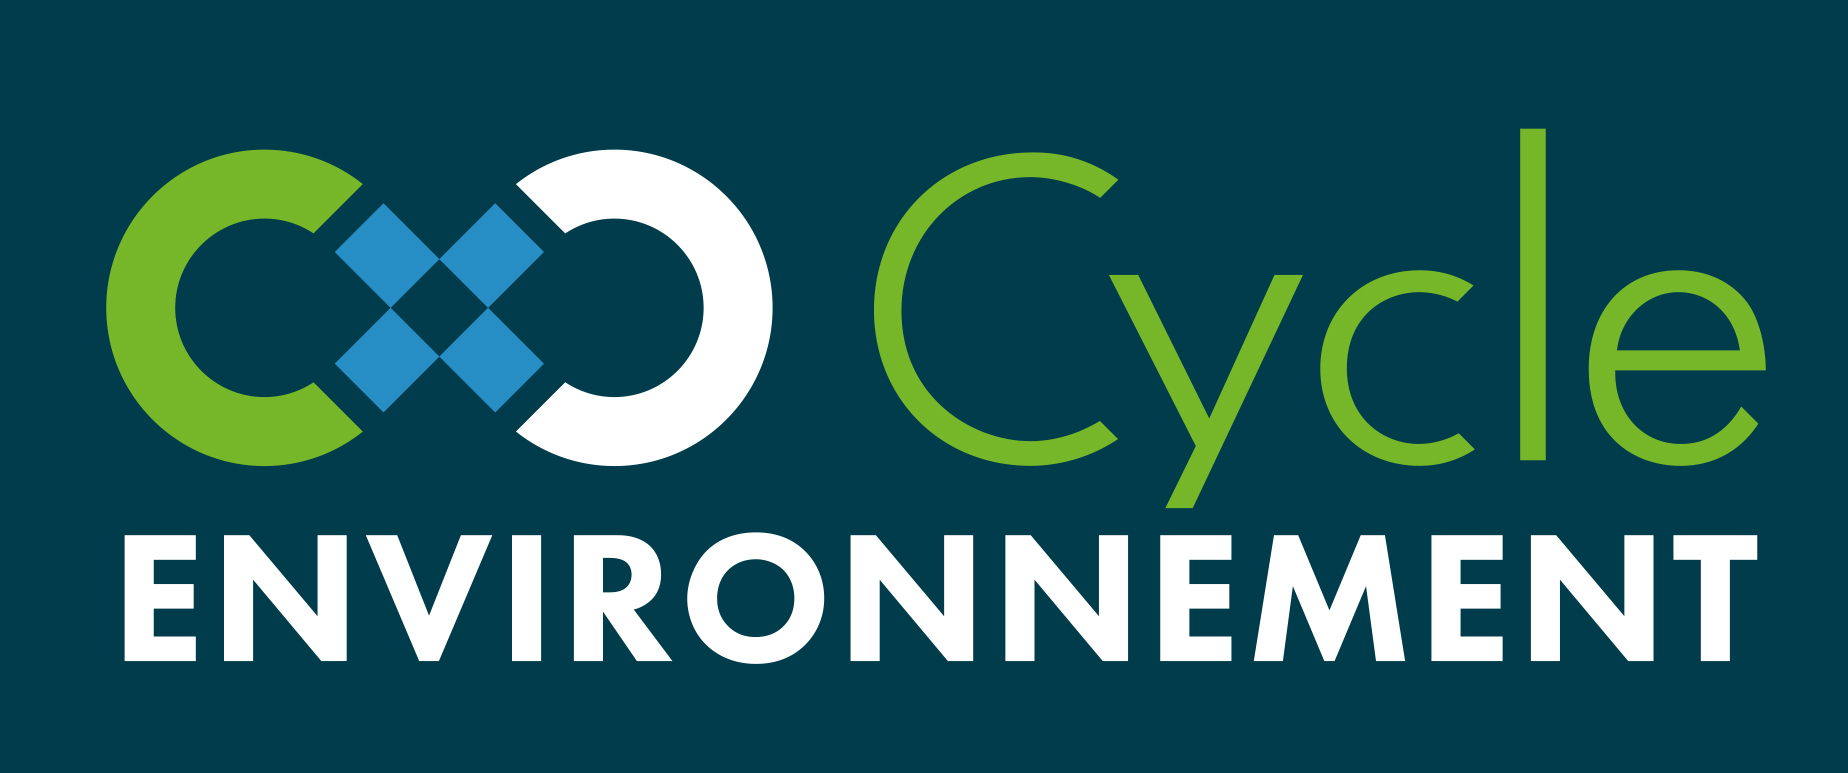 Cycle environnement